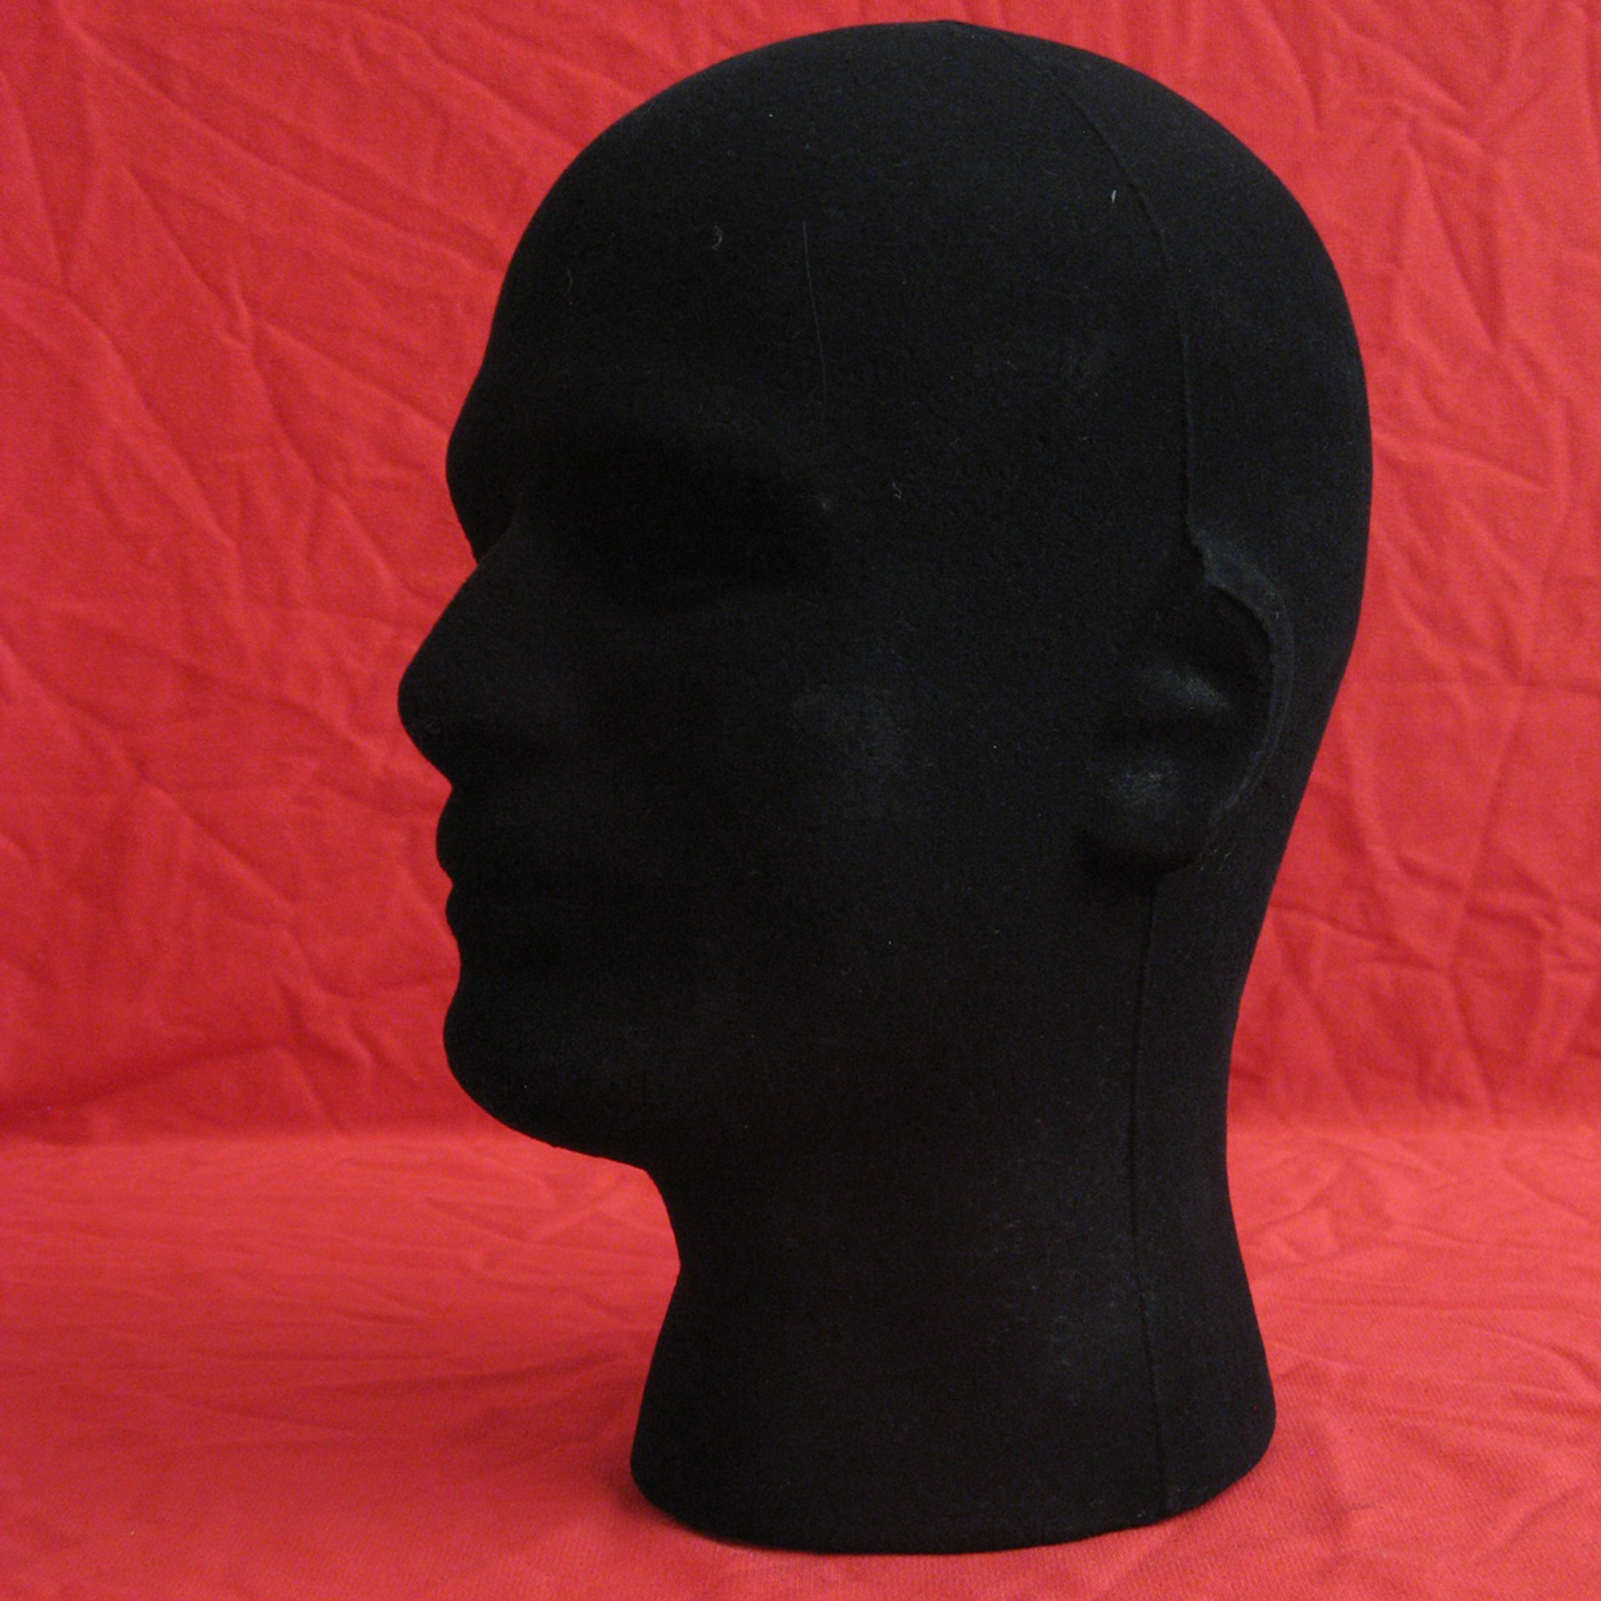 Sunjoy Tech Male Wigs Display Mannequin Head Stand Model Headsets Mount Styrofoam Foam Flocking Black - image 4 of 8